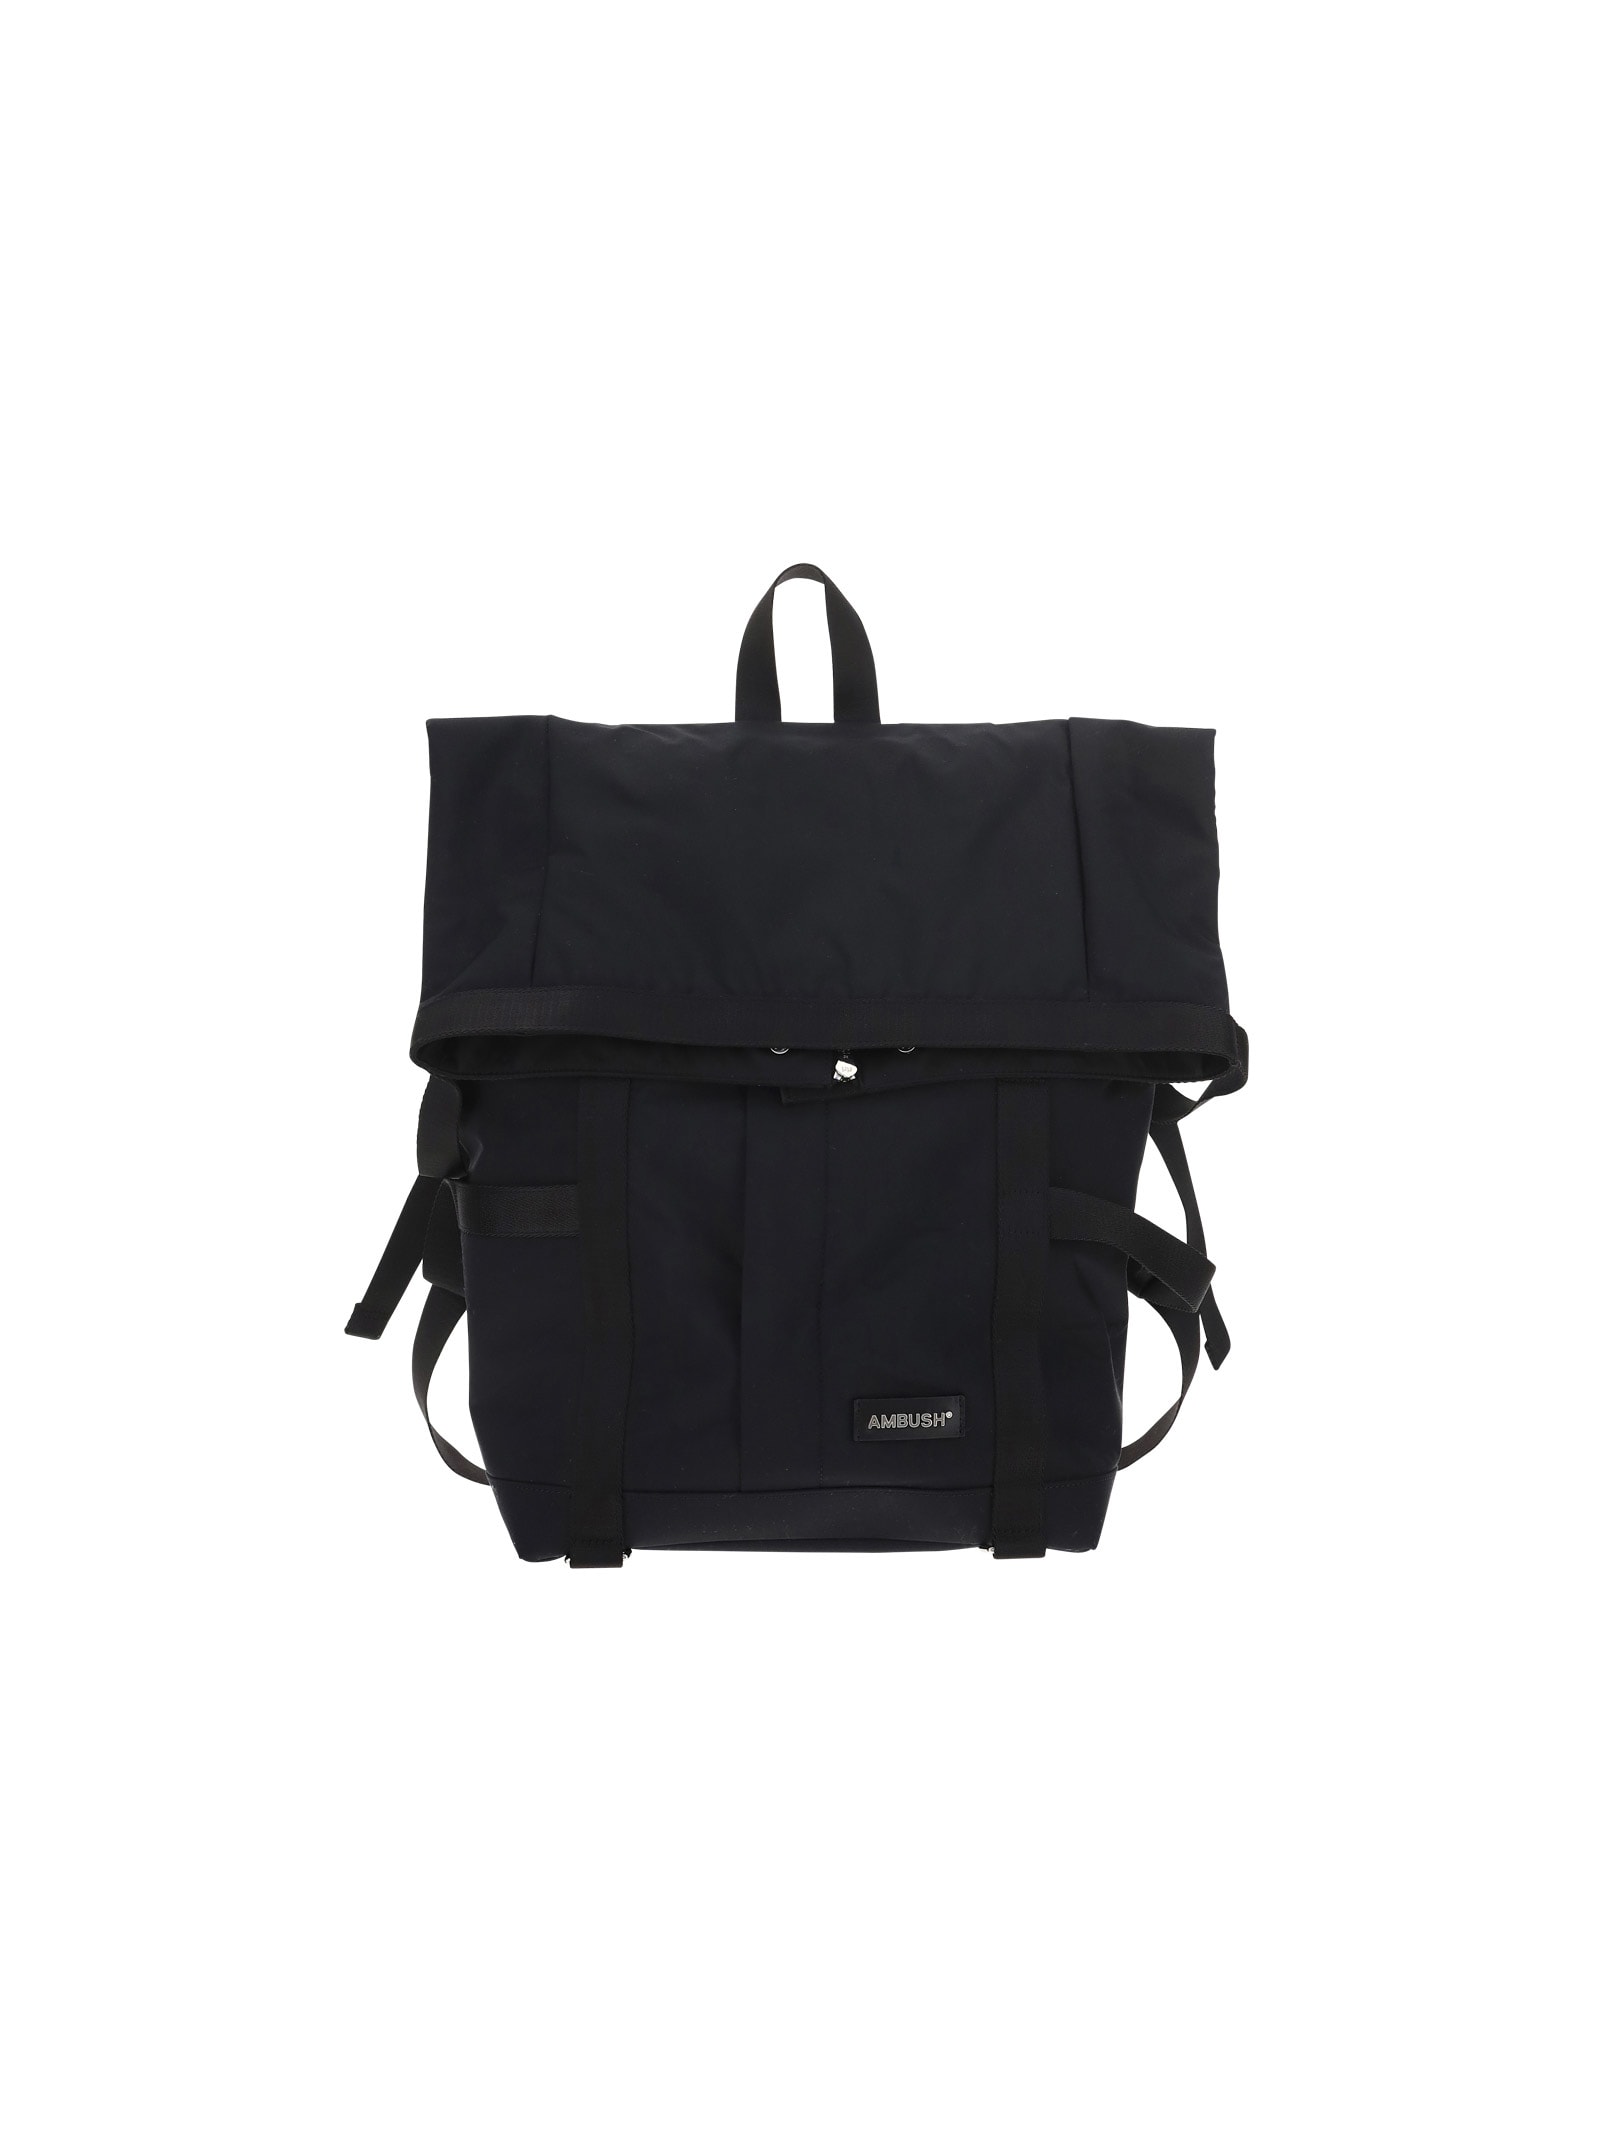 AMBUSH Backpack